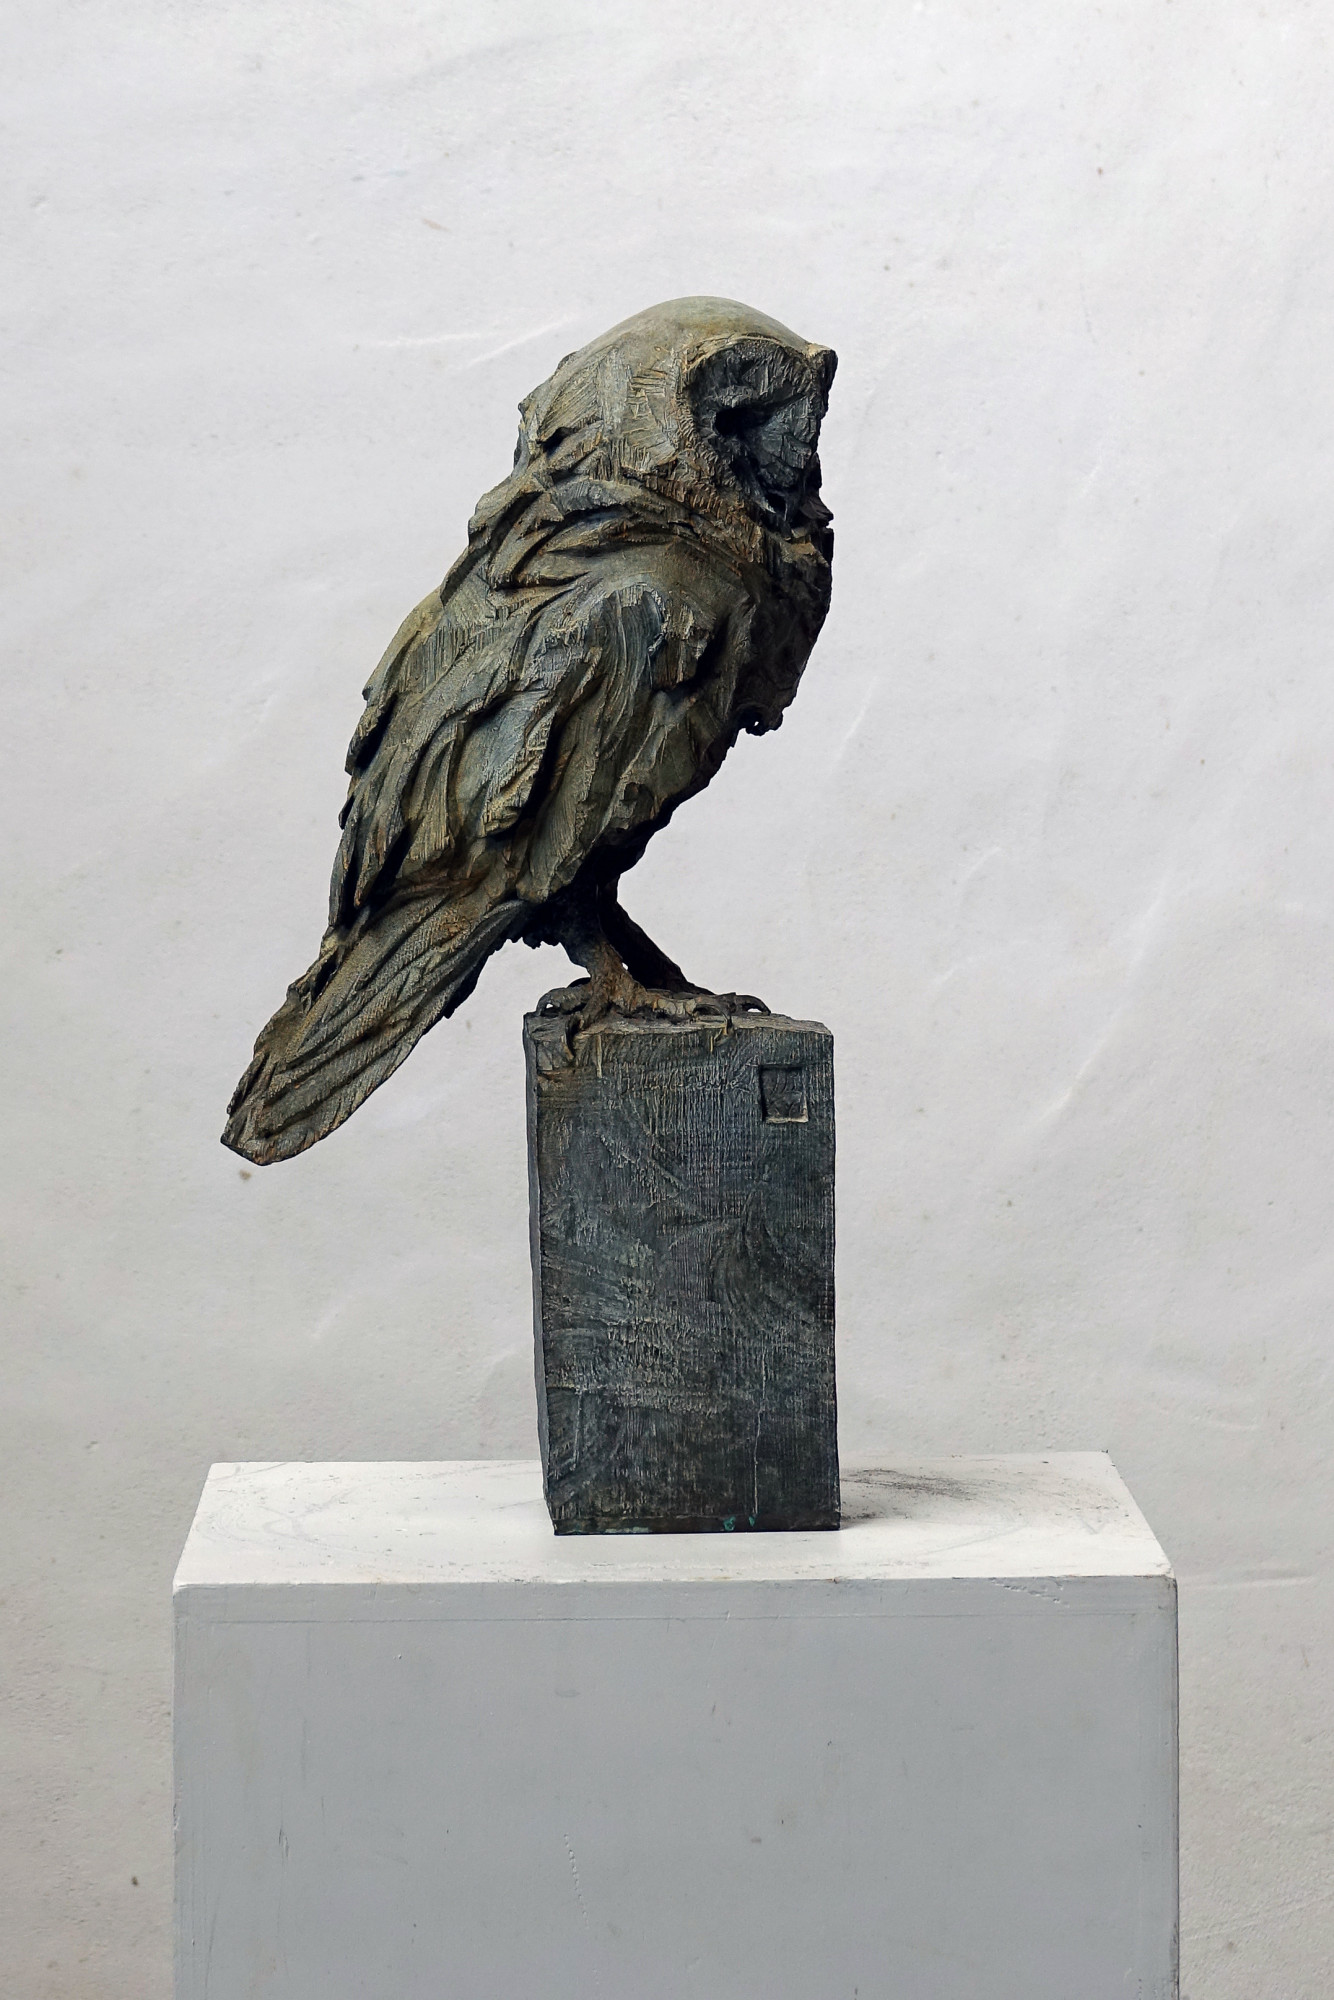 Untitled - Owl 1 (2)